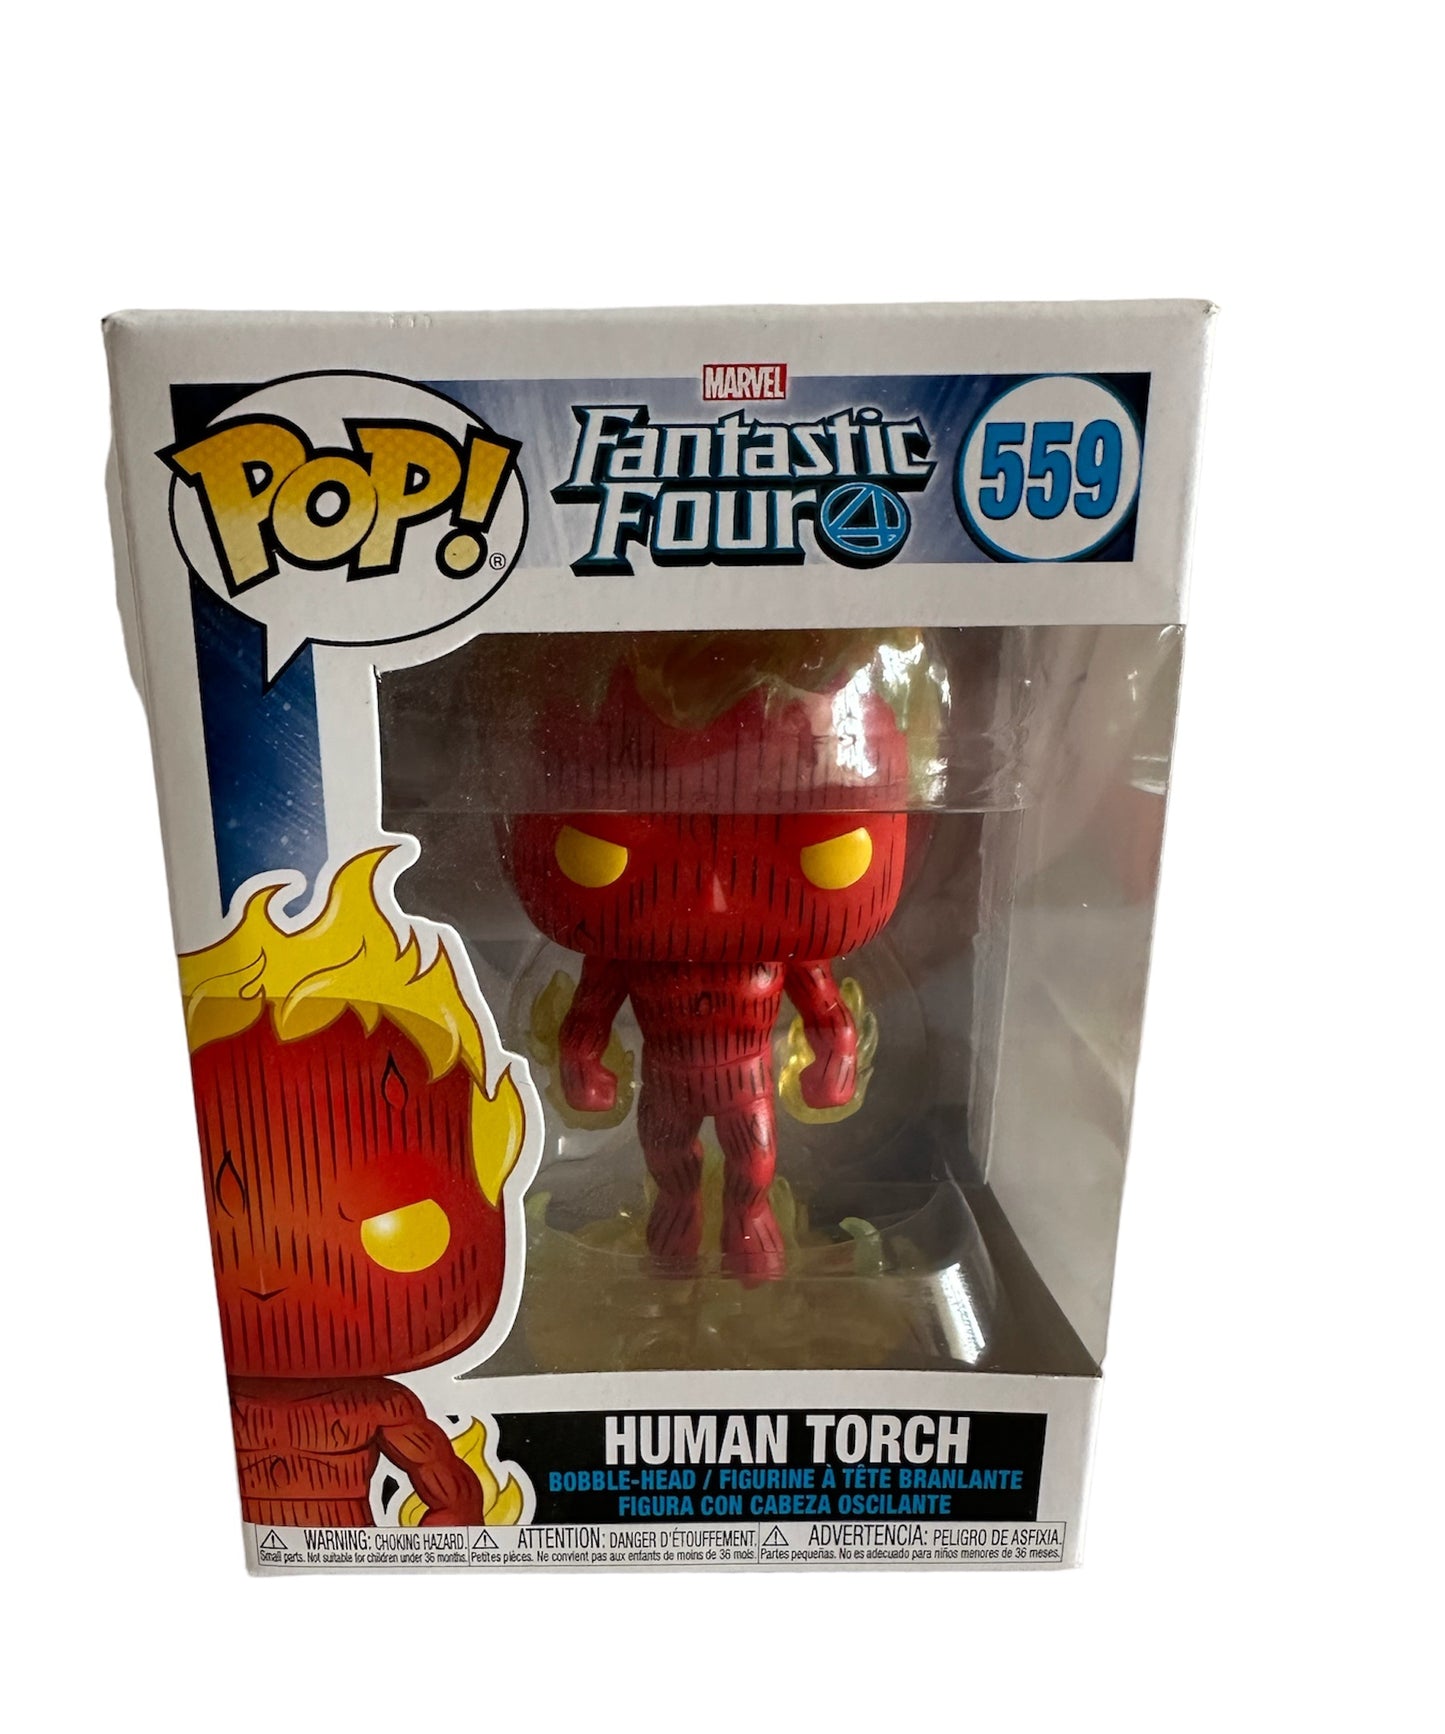 POP! 2019 Marvels The Fantastic Four Pop Vinyl Figure - The Human Torch Johnny Storm Bobble-Head No. 559 - Brand New Shop Stock Room Find